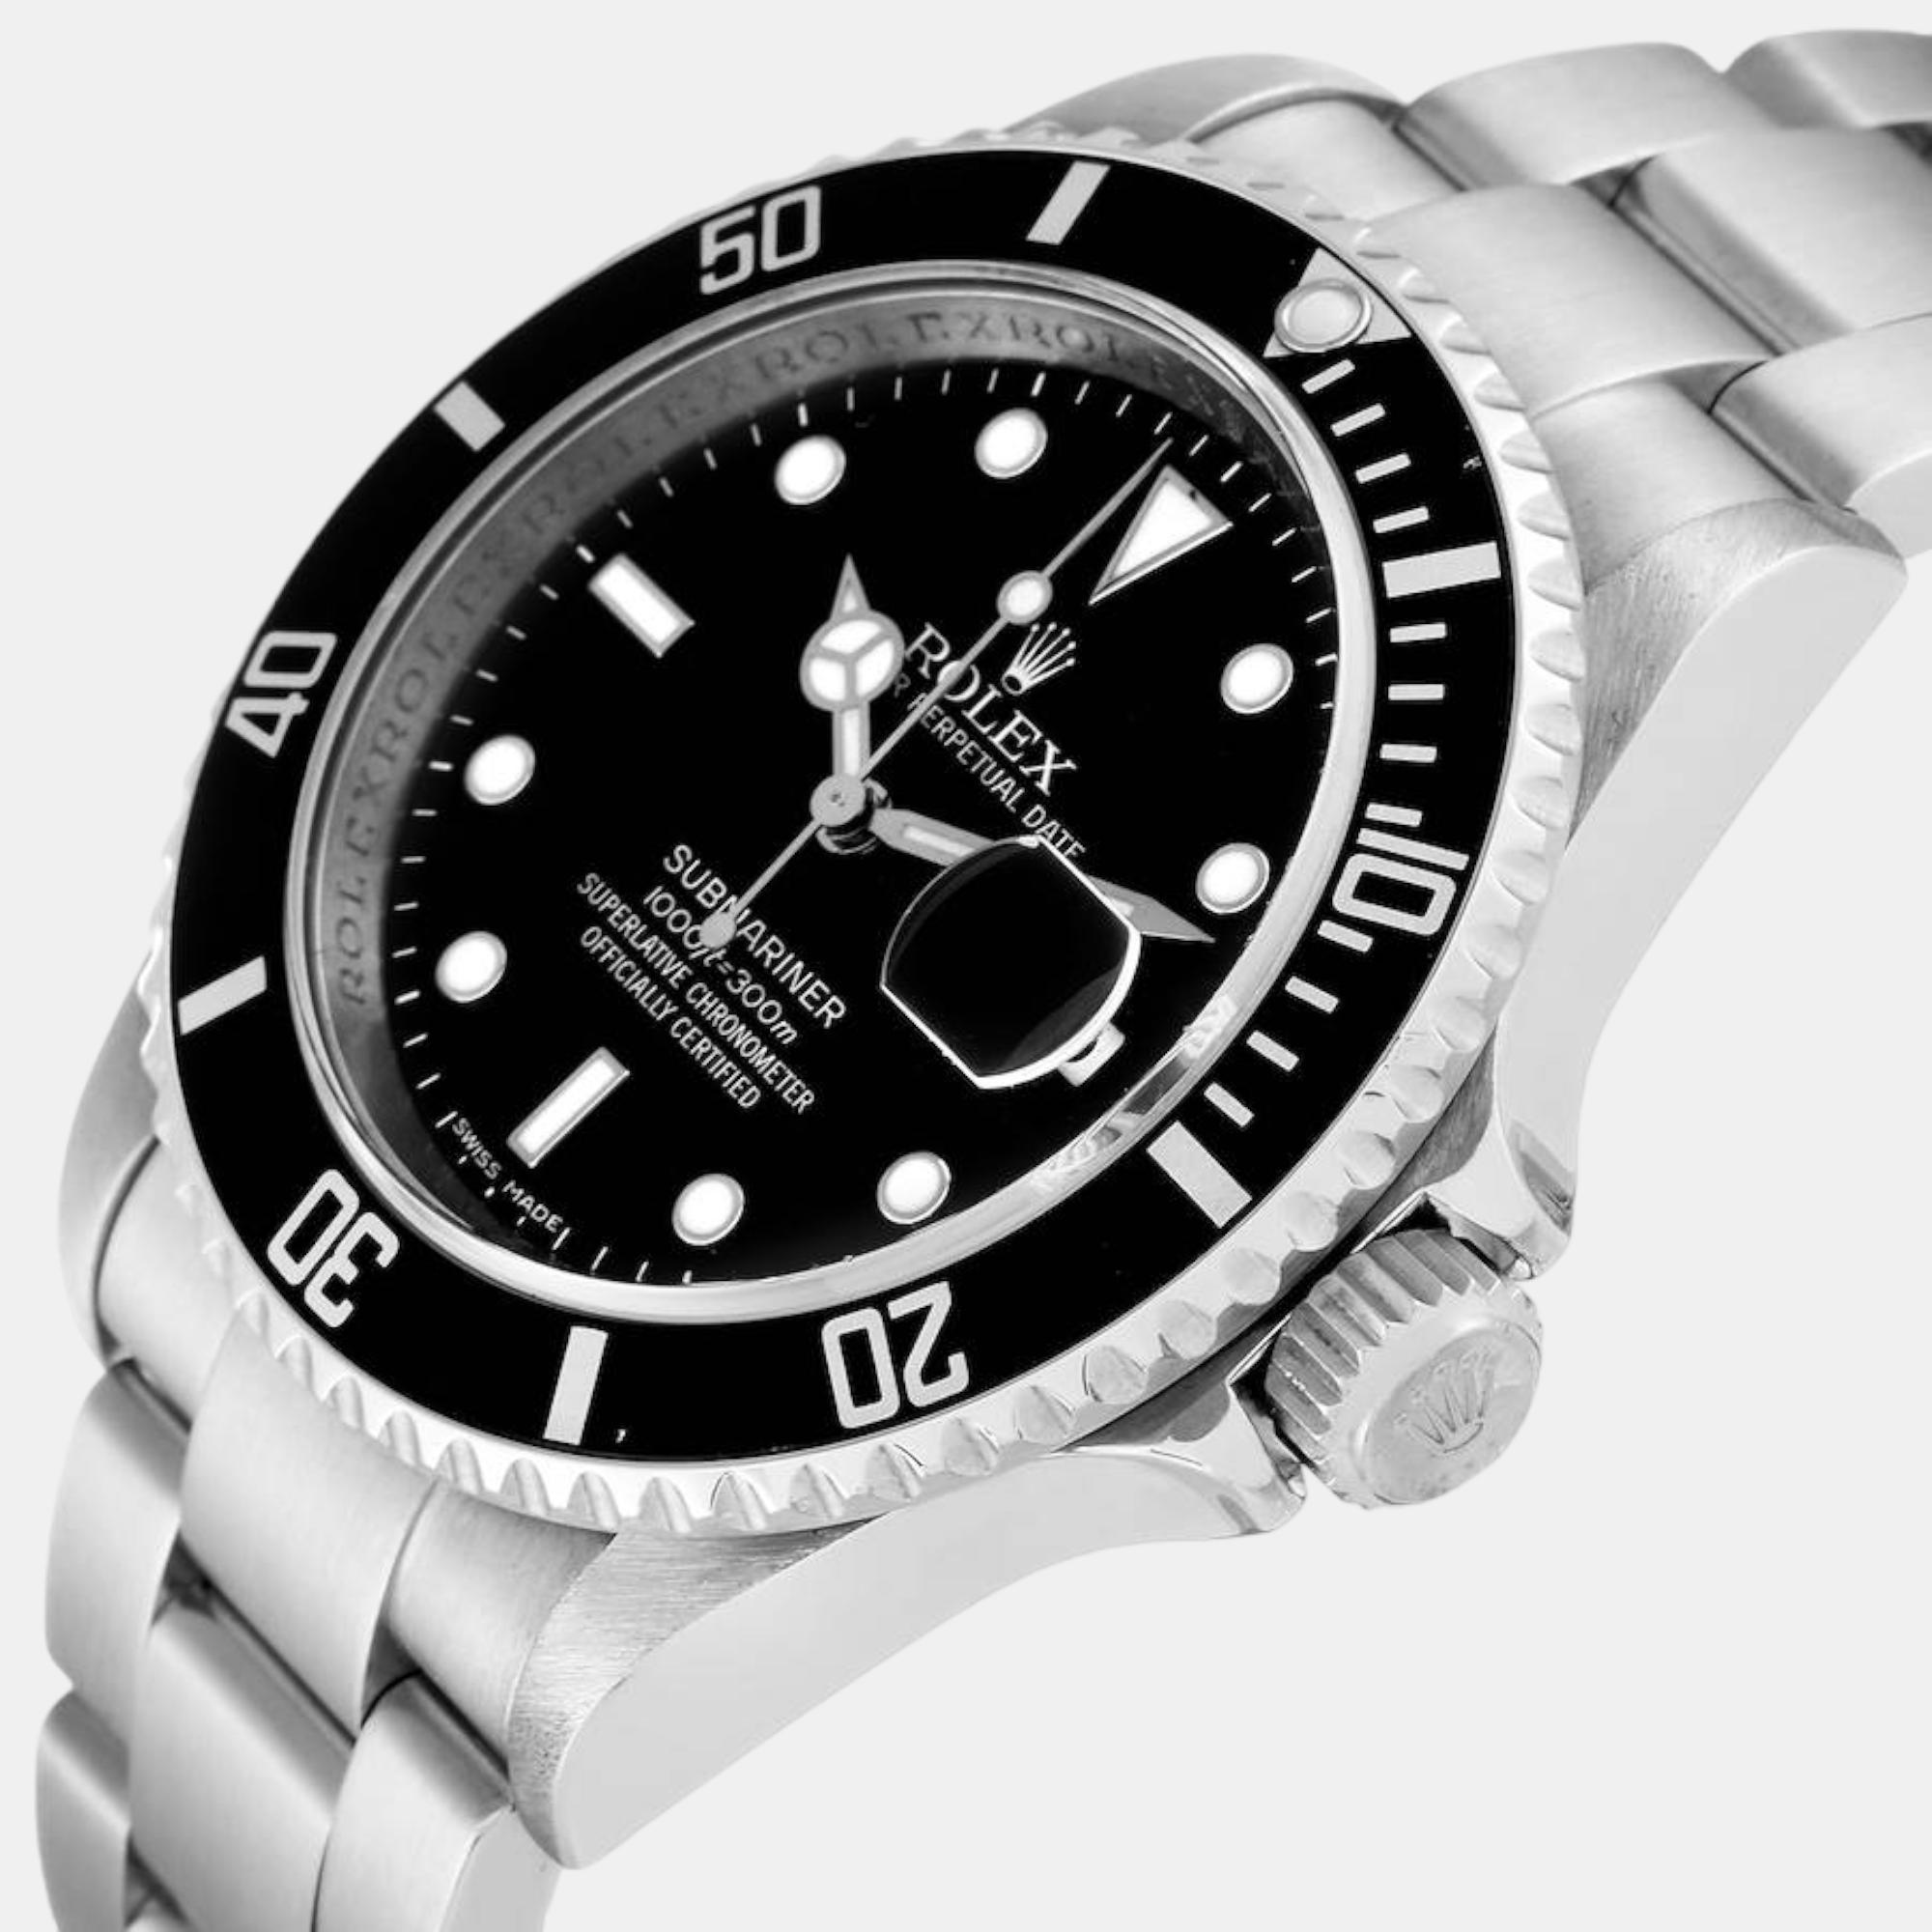 

Rolex Submariner Date Black Dial Steel Mens Watch 16610